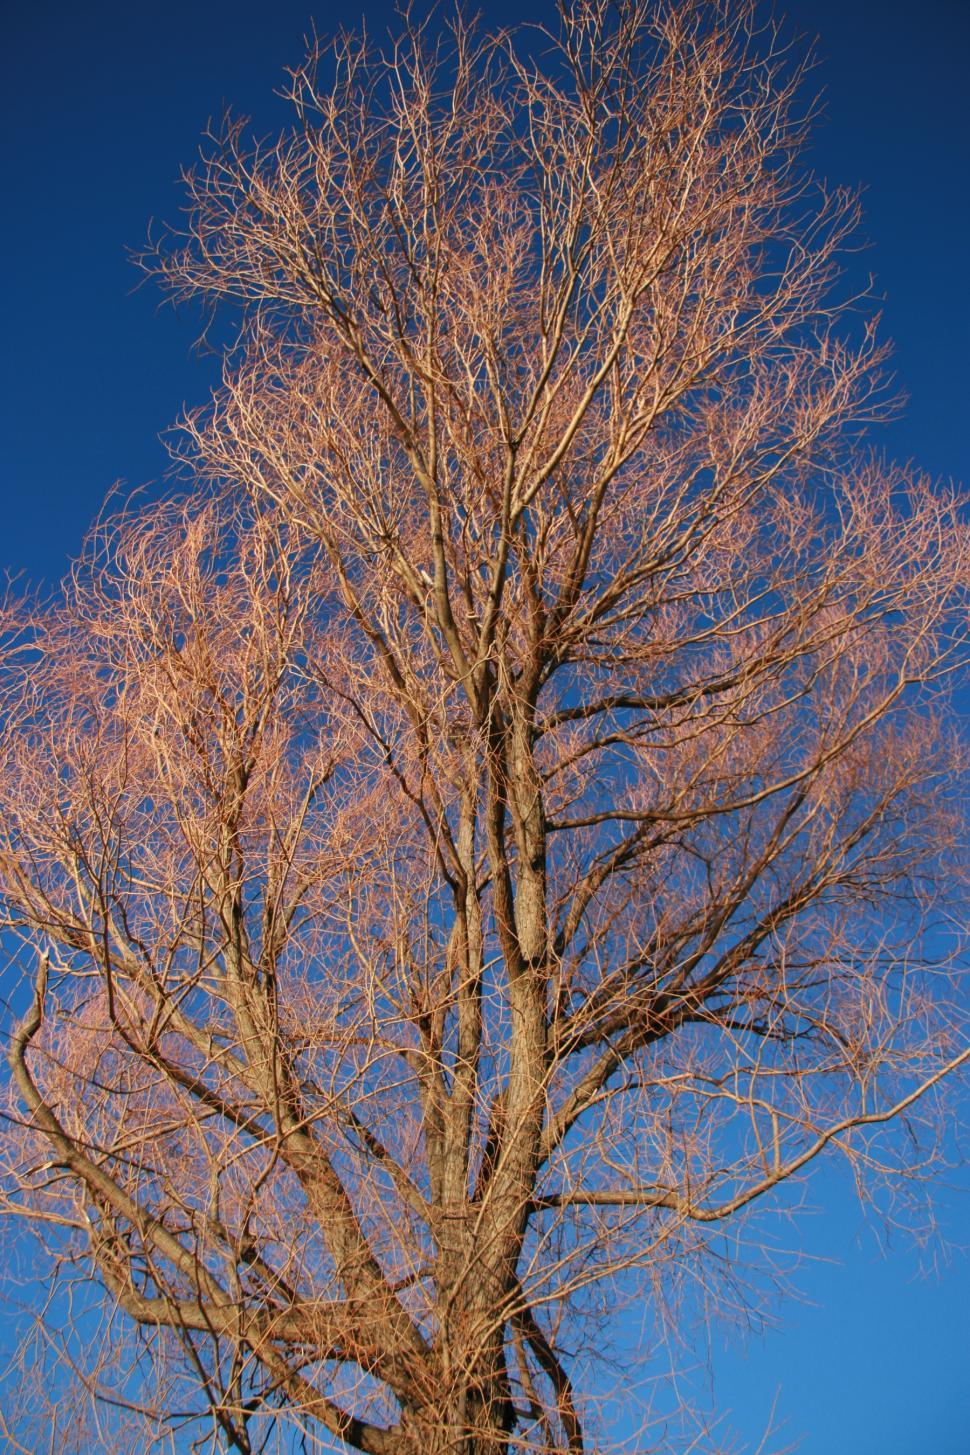 Free Image of Barren Tree in Winter 